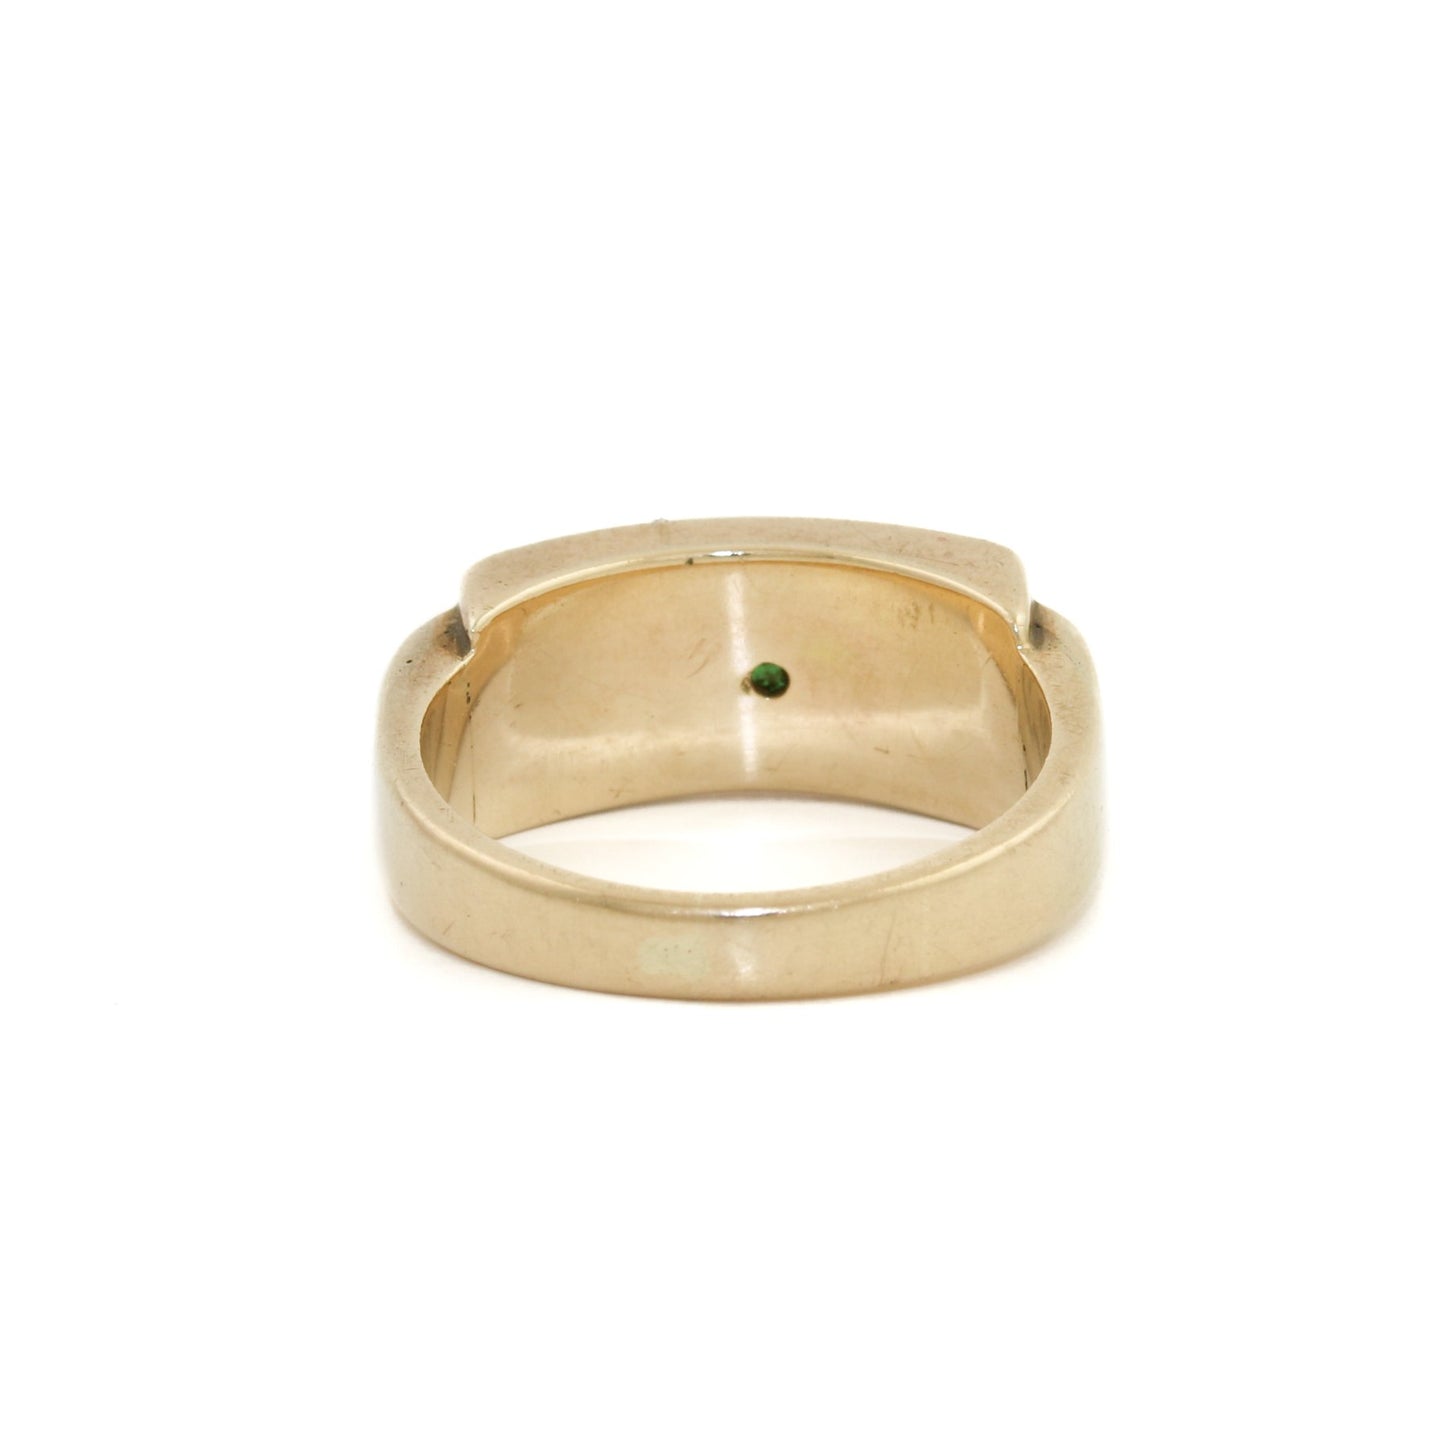 10k Gold x Green Jade Rectangle Signet Band - Kingdom Jewelry